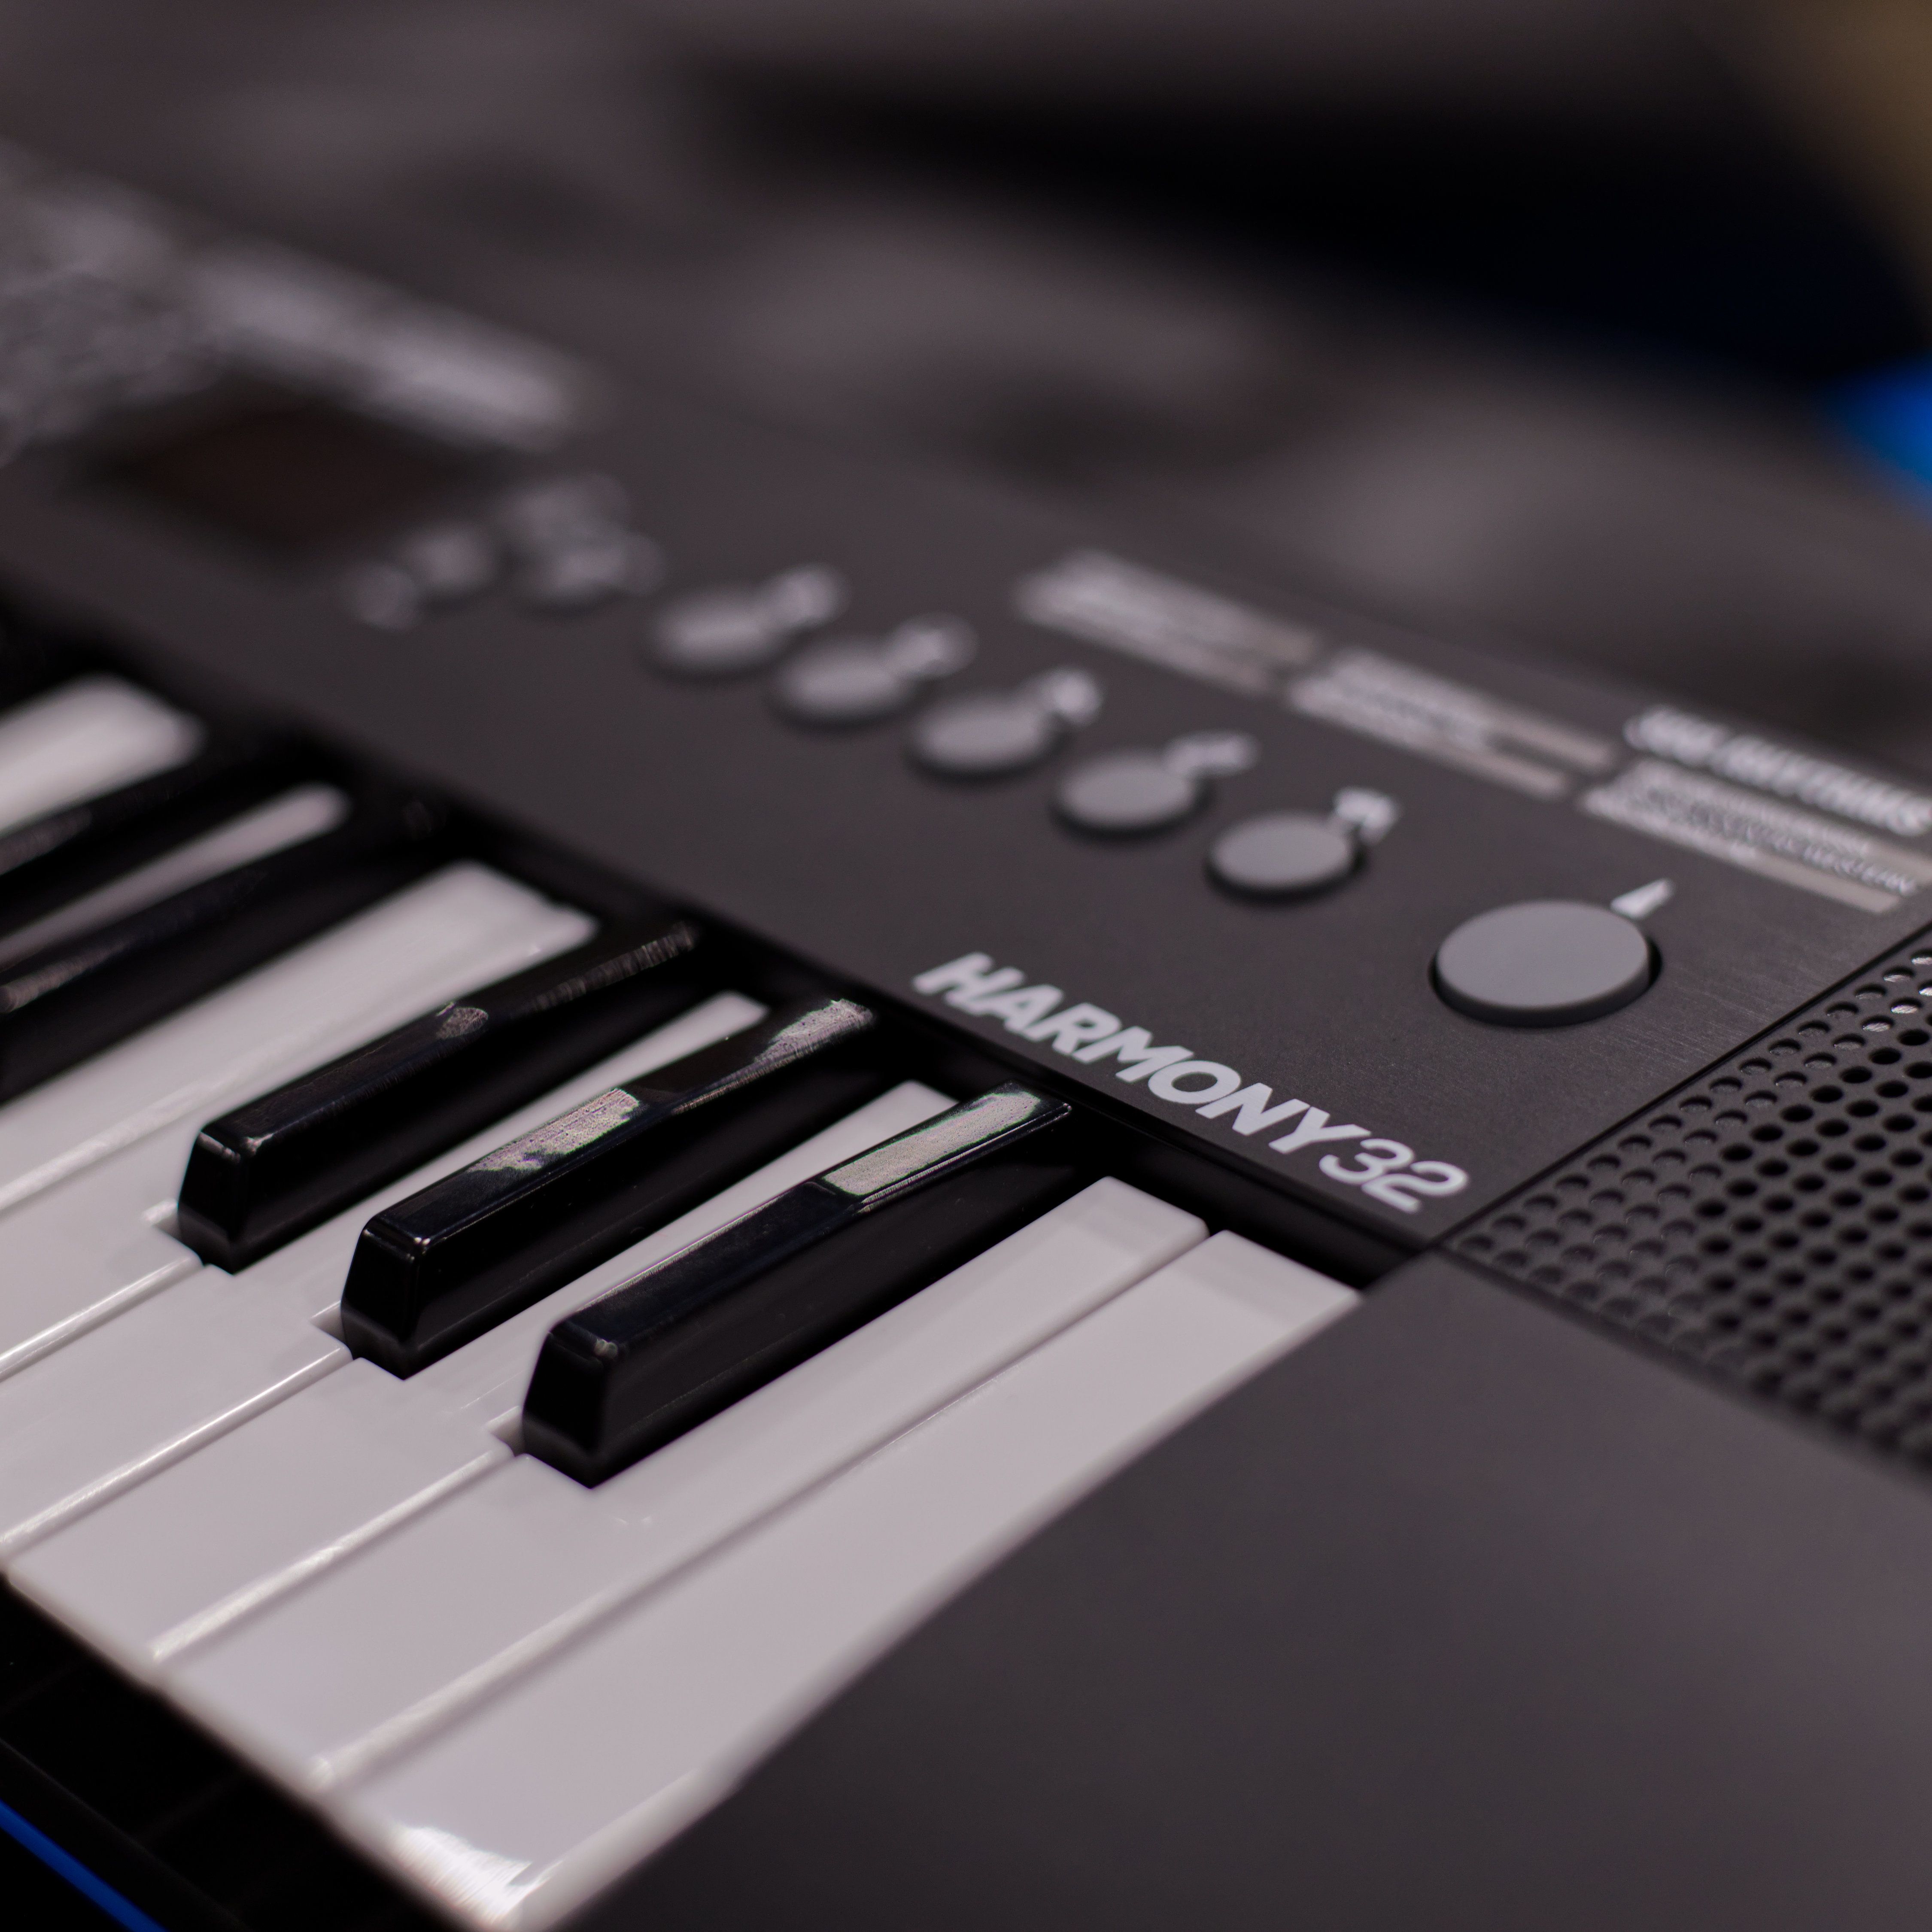 Alesis Harmony 32 Portable 32-Key Mini Digital Piano/Keyboard with Built-in  Speakers 